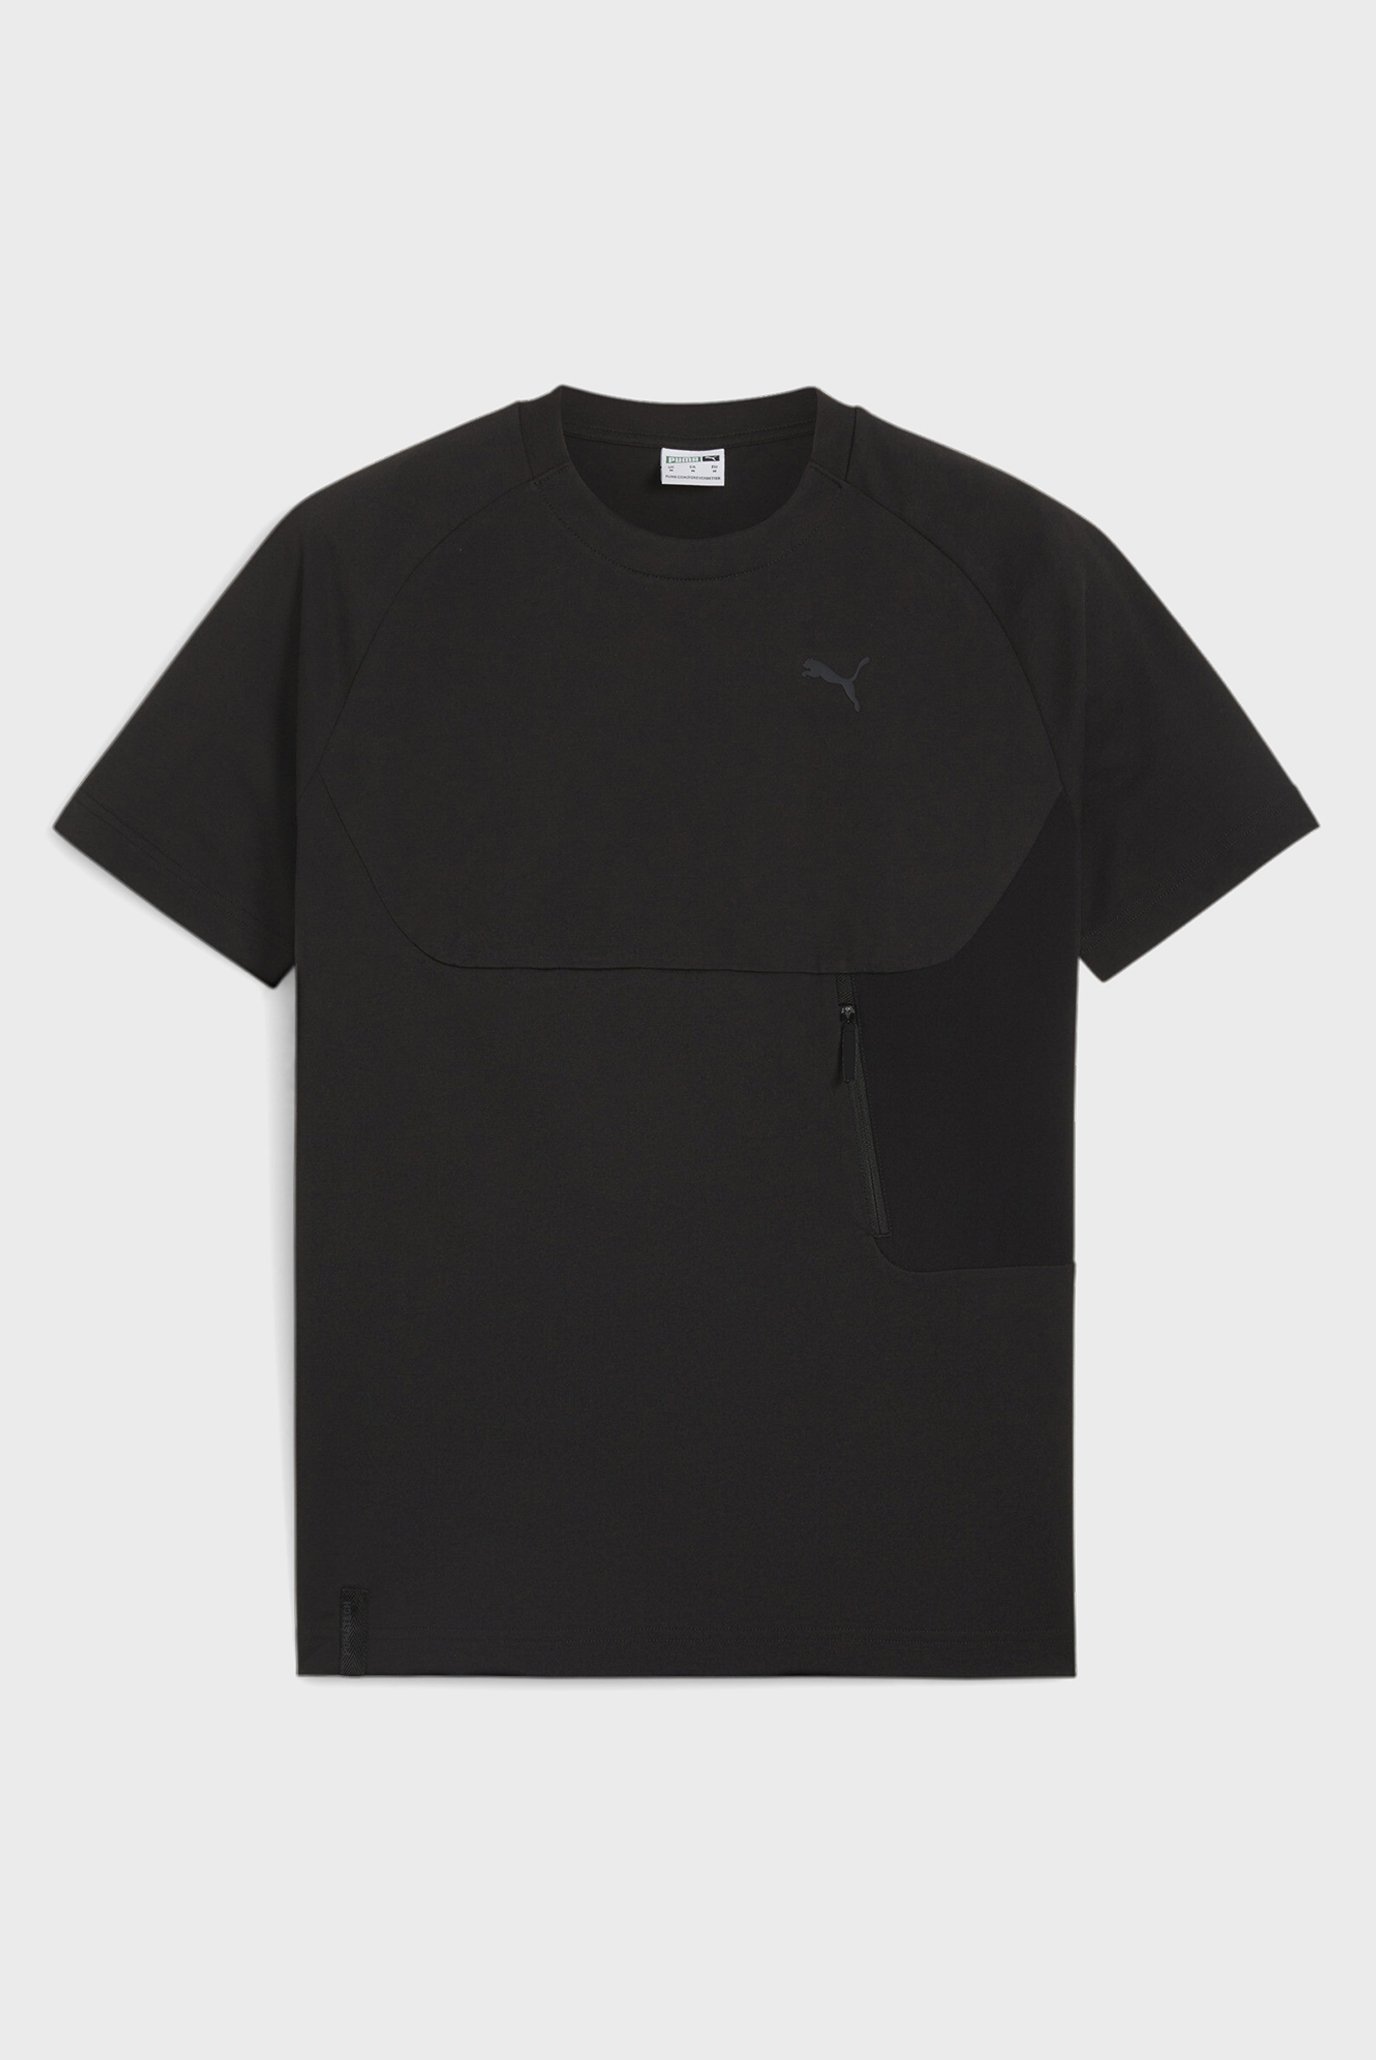 Мужская черная футболка
PUMATECH Men's Pocket Tee 1